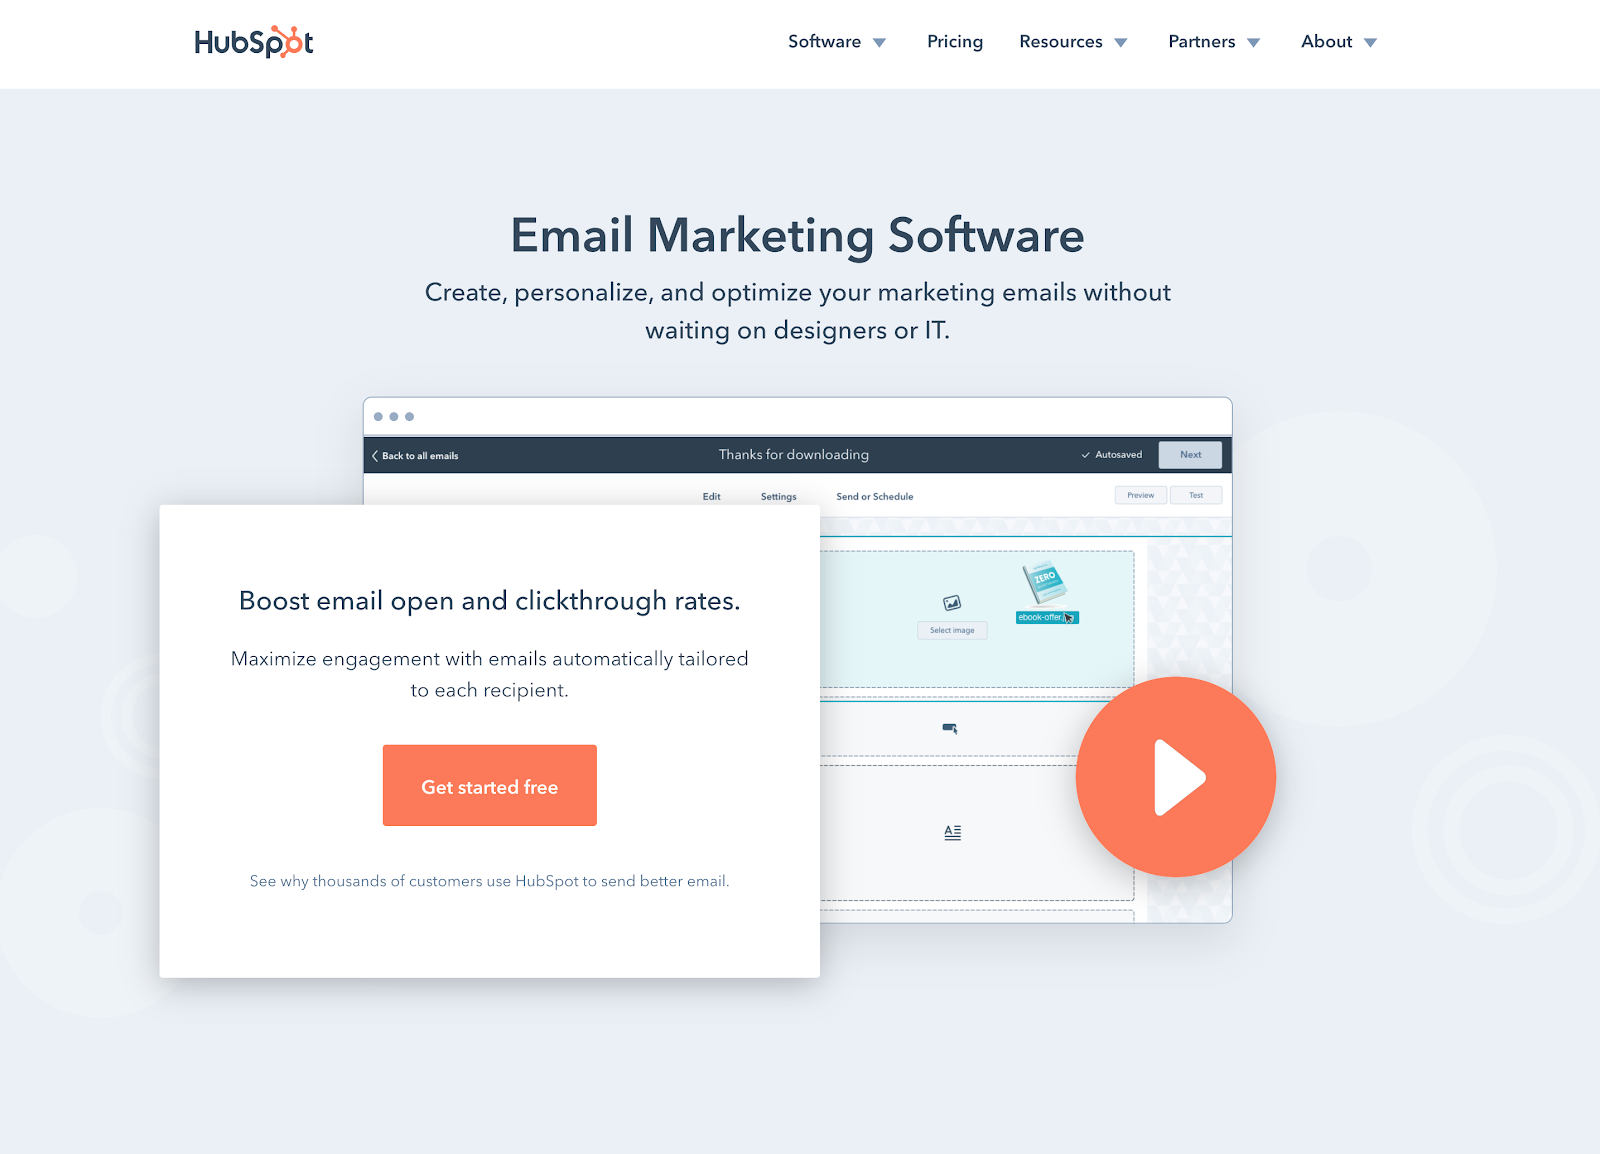 HubSpot Email Marketing Software